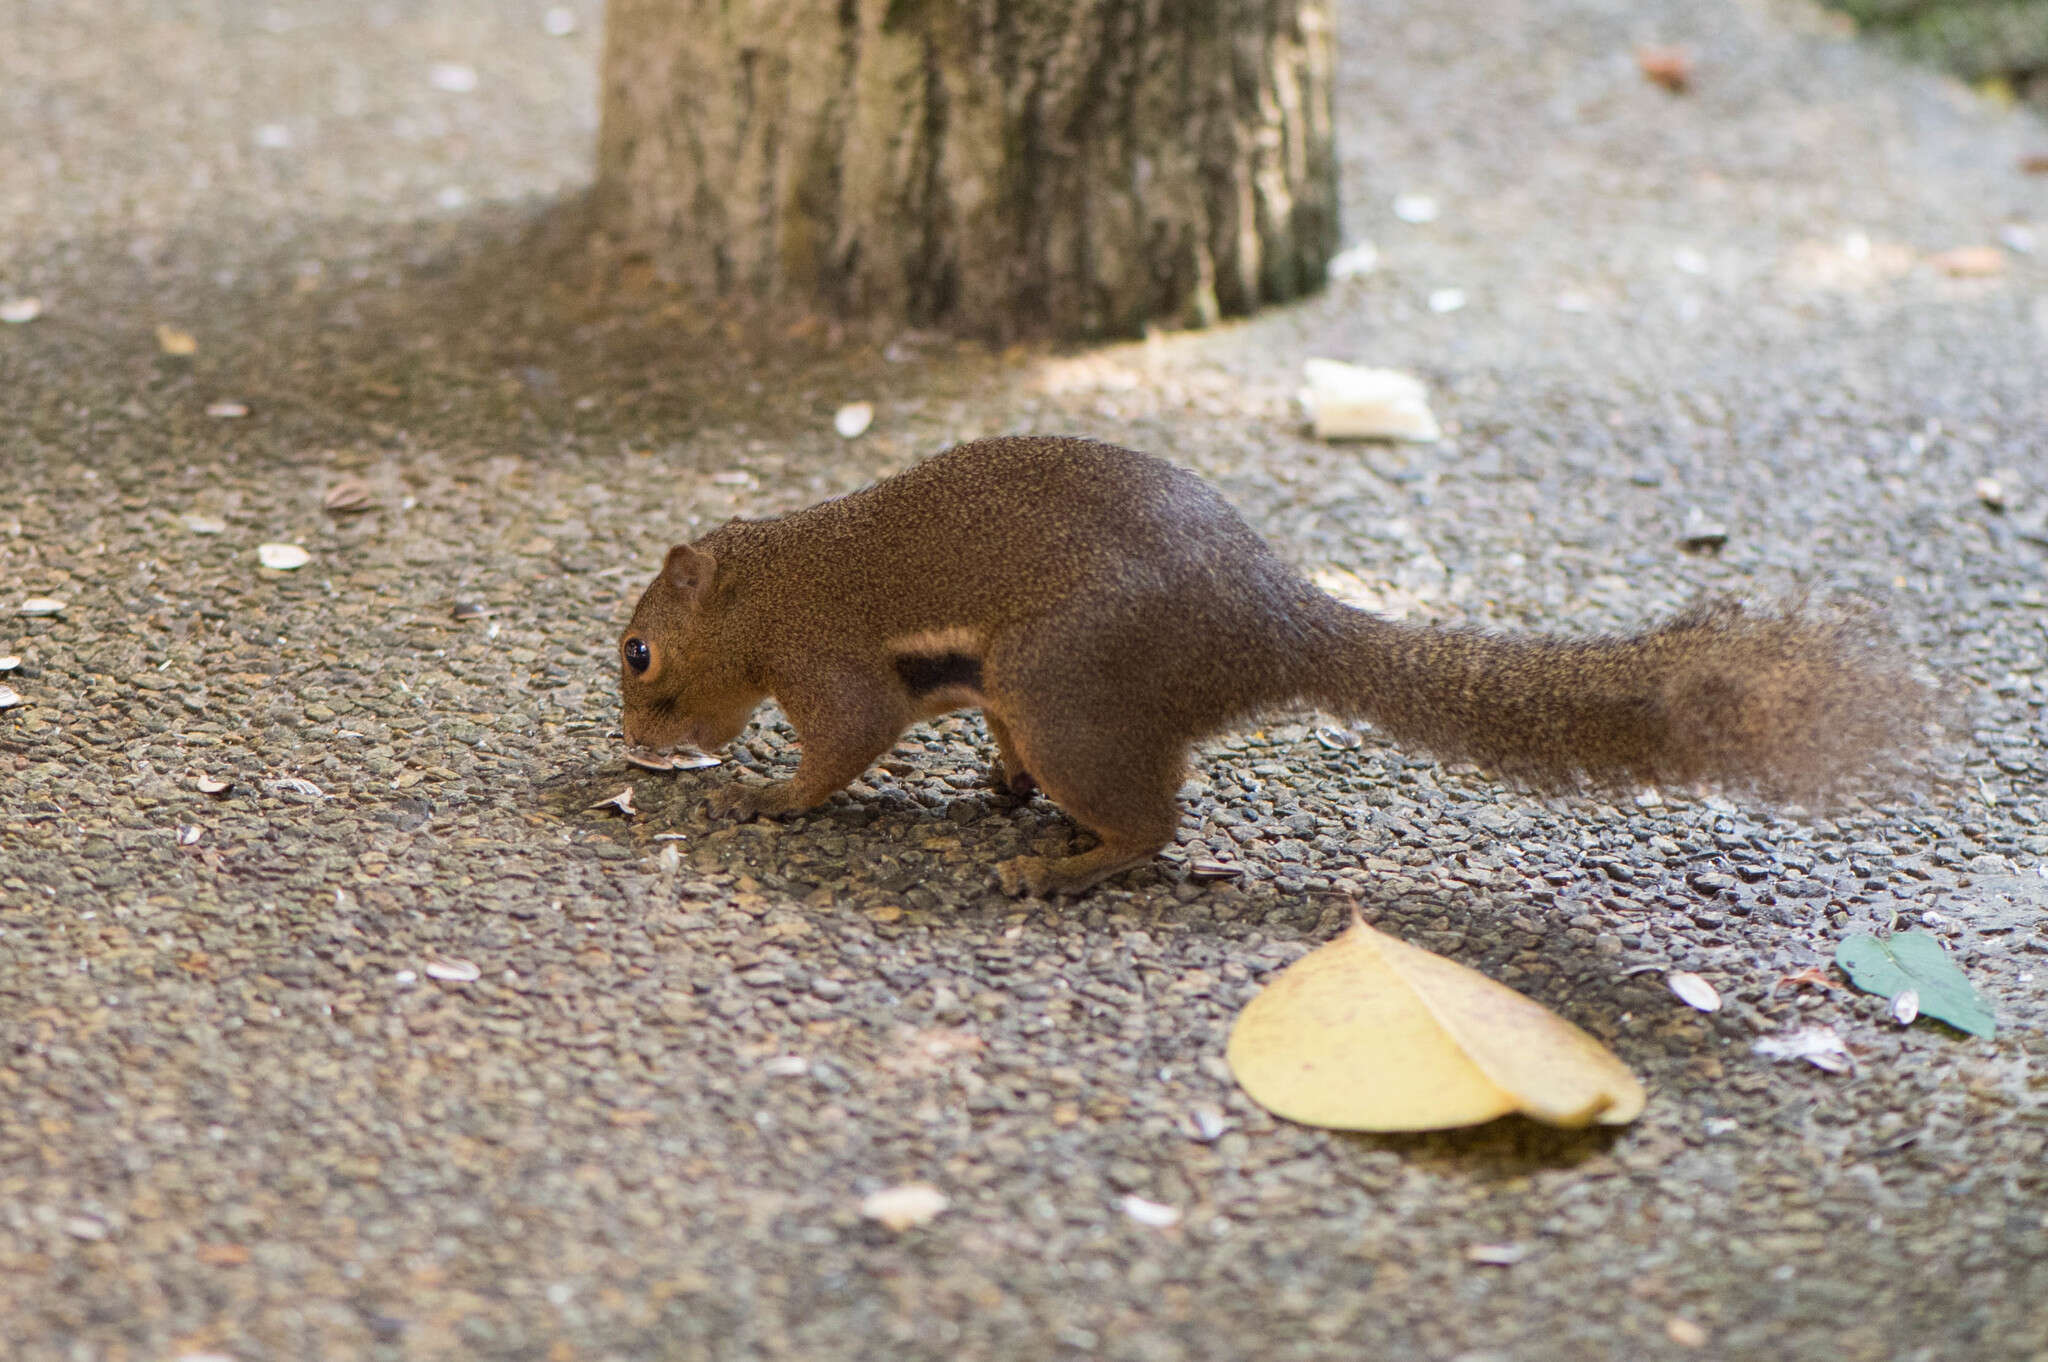 Image of Plantain Squirrel